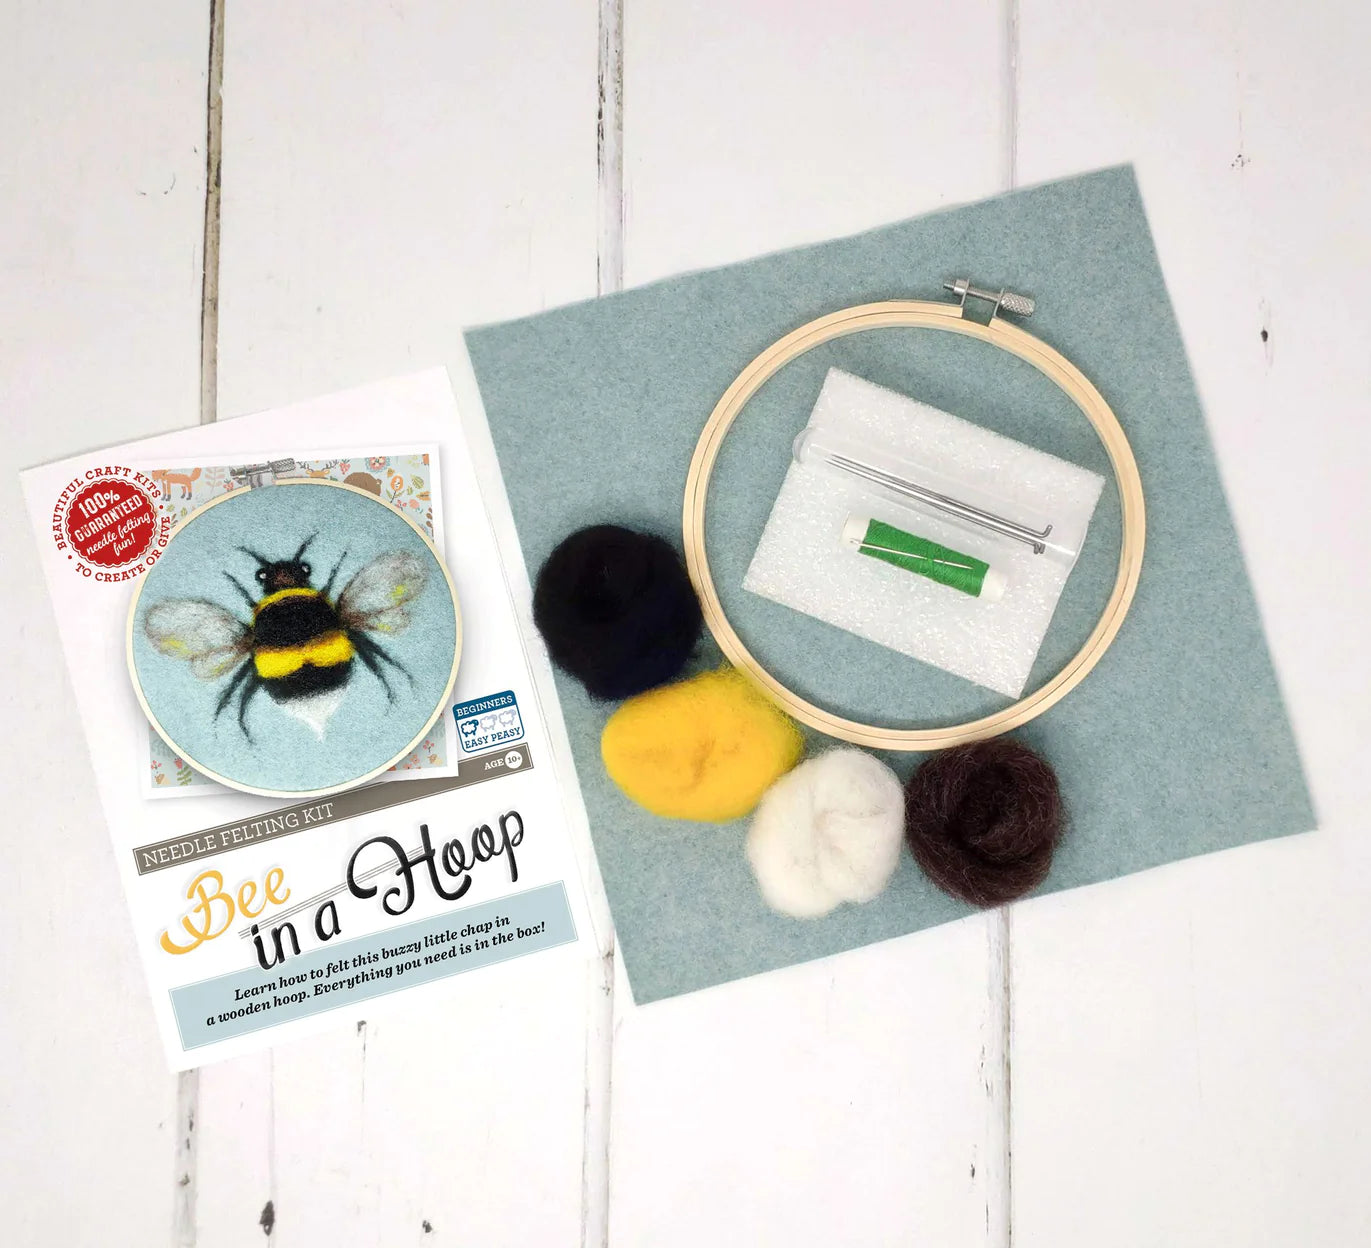 Honey Bee in a Hoop - Needle Felting Kit - Lovely Summer Project